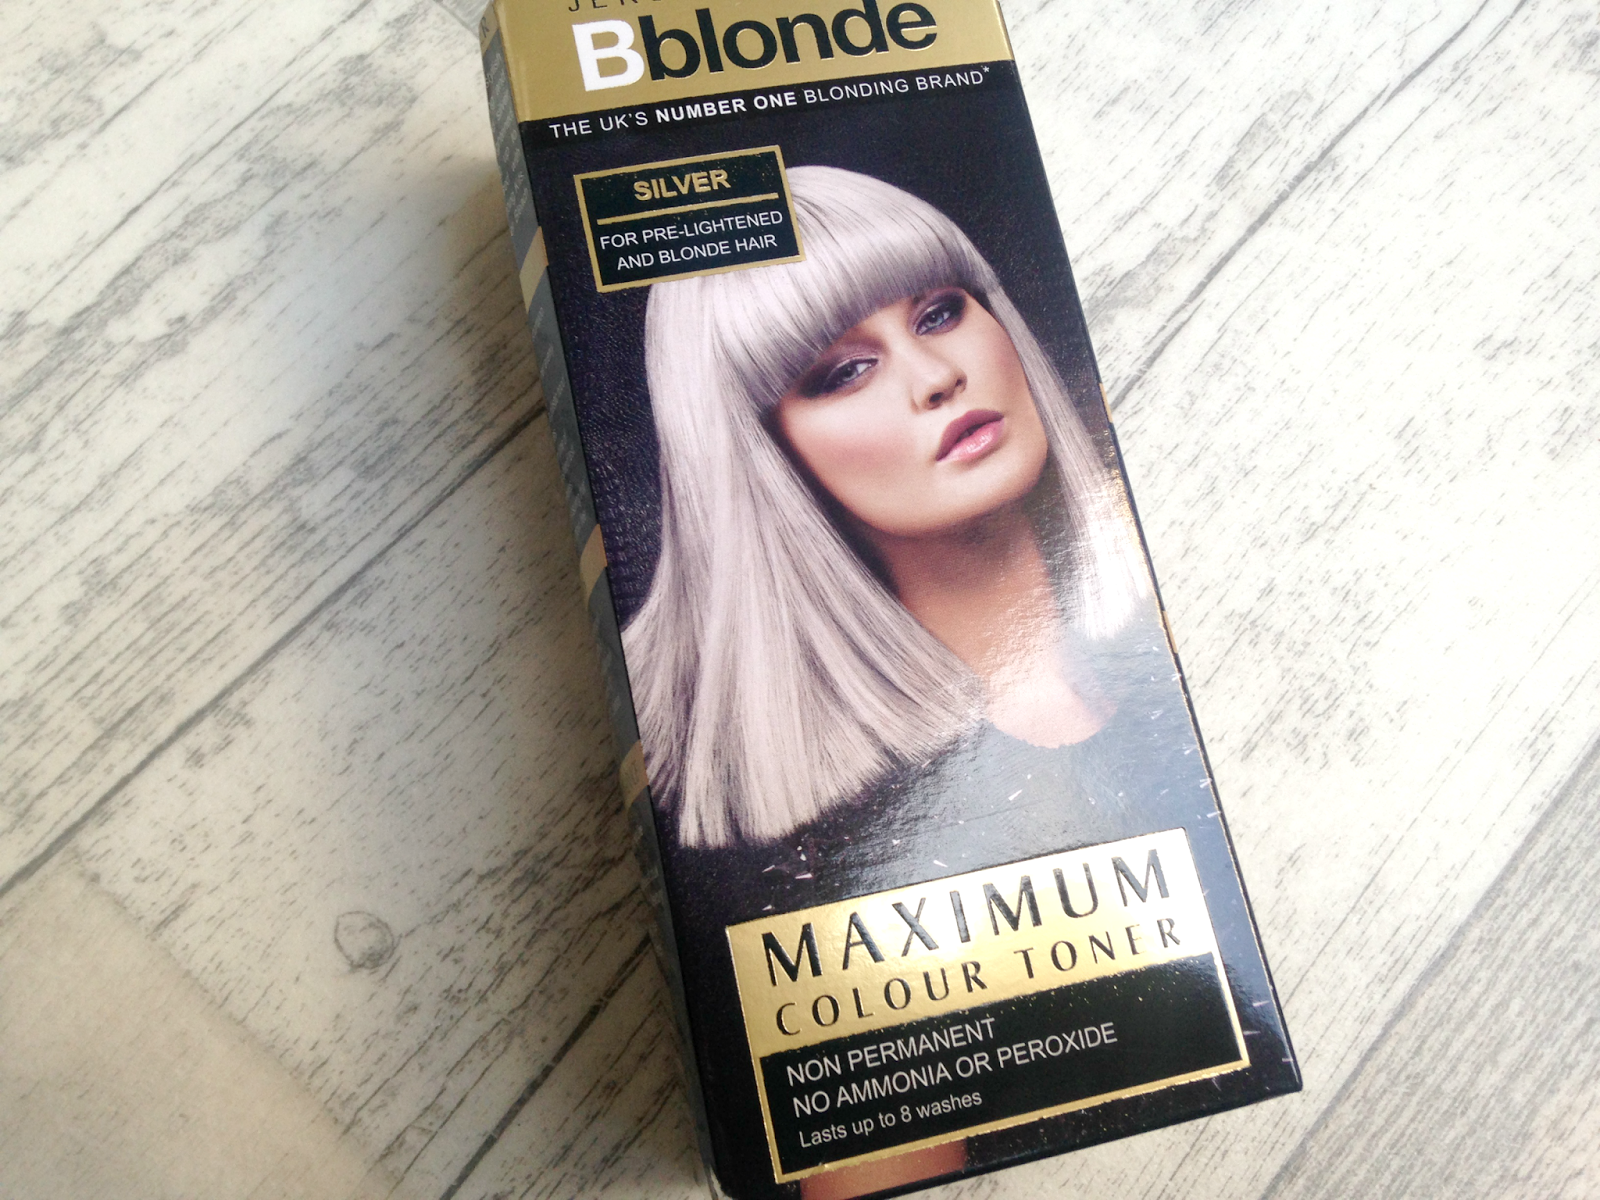 Jerome Russell Bblonde Maximum Blonding Kit - wide 6